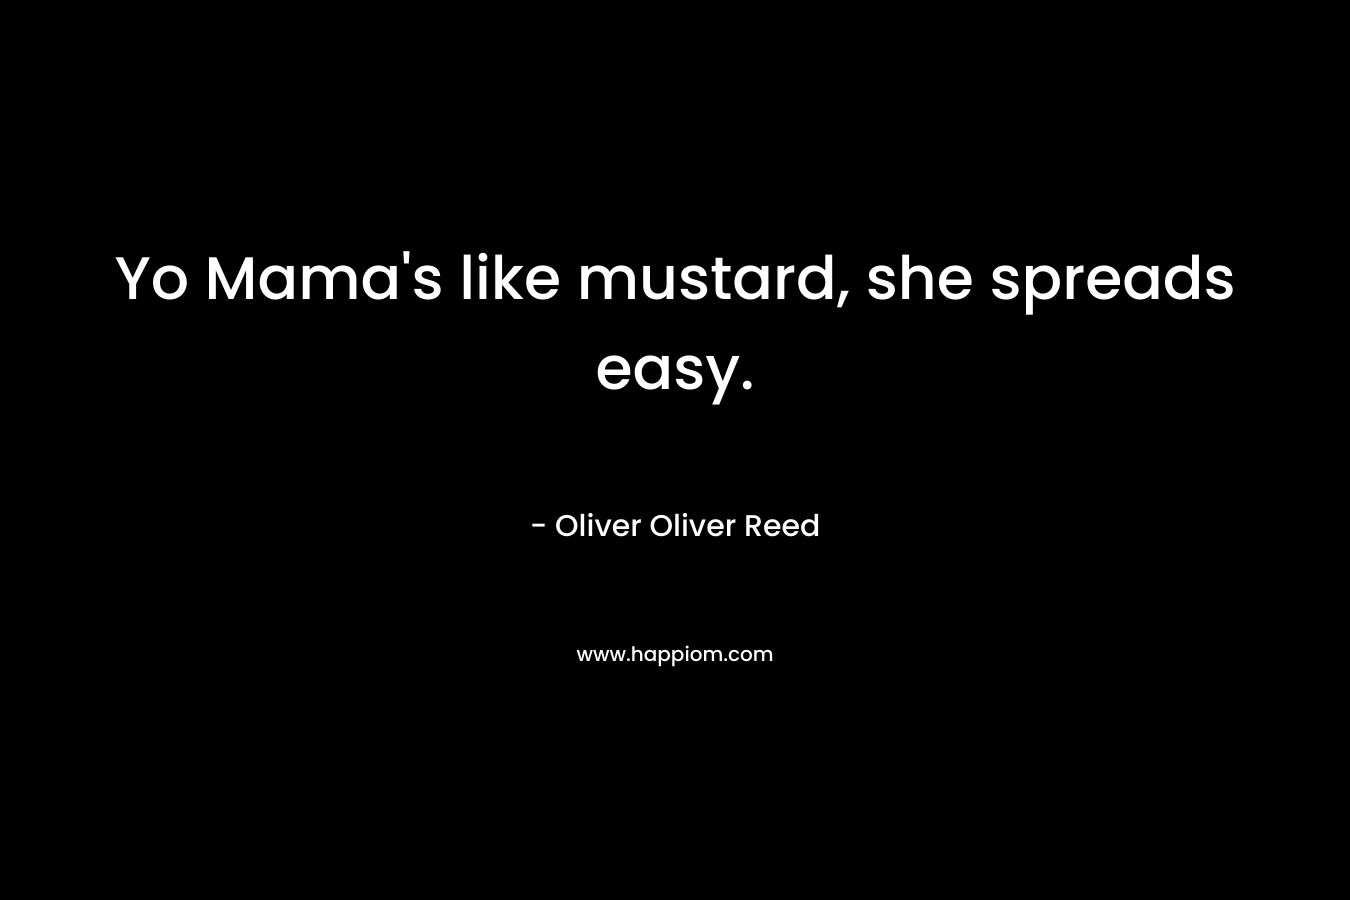 Yo Mama's like mustard, she spreads easy.